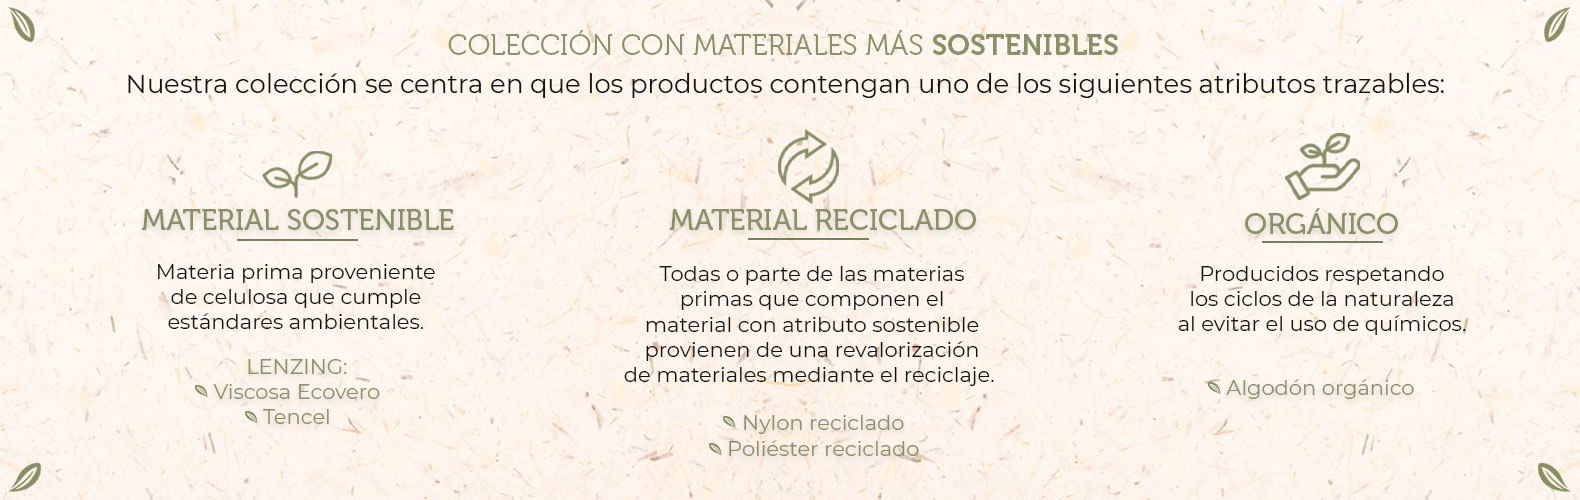 Materiales sostenible